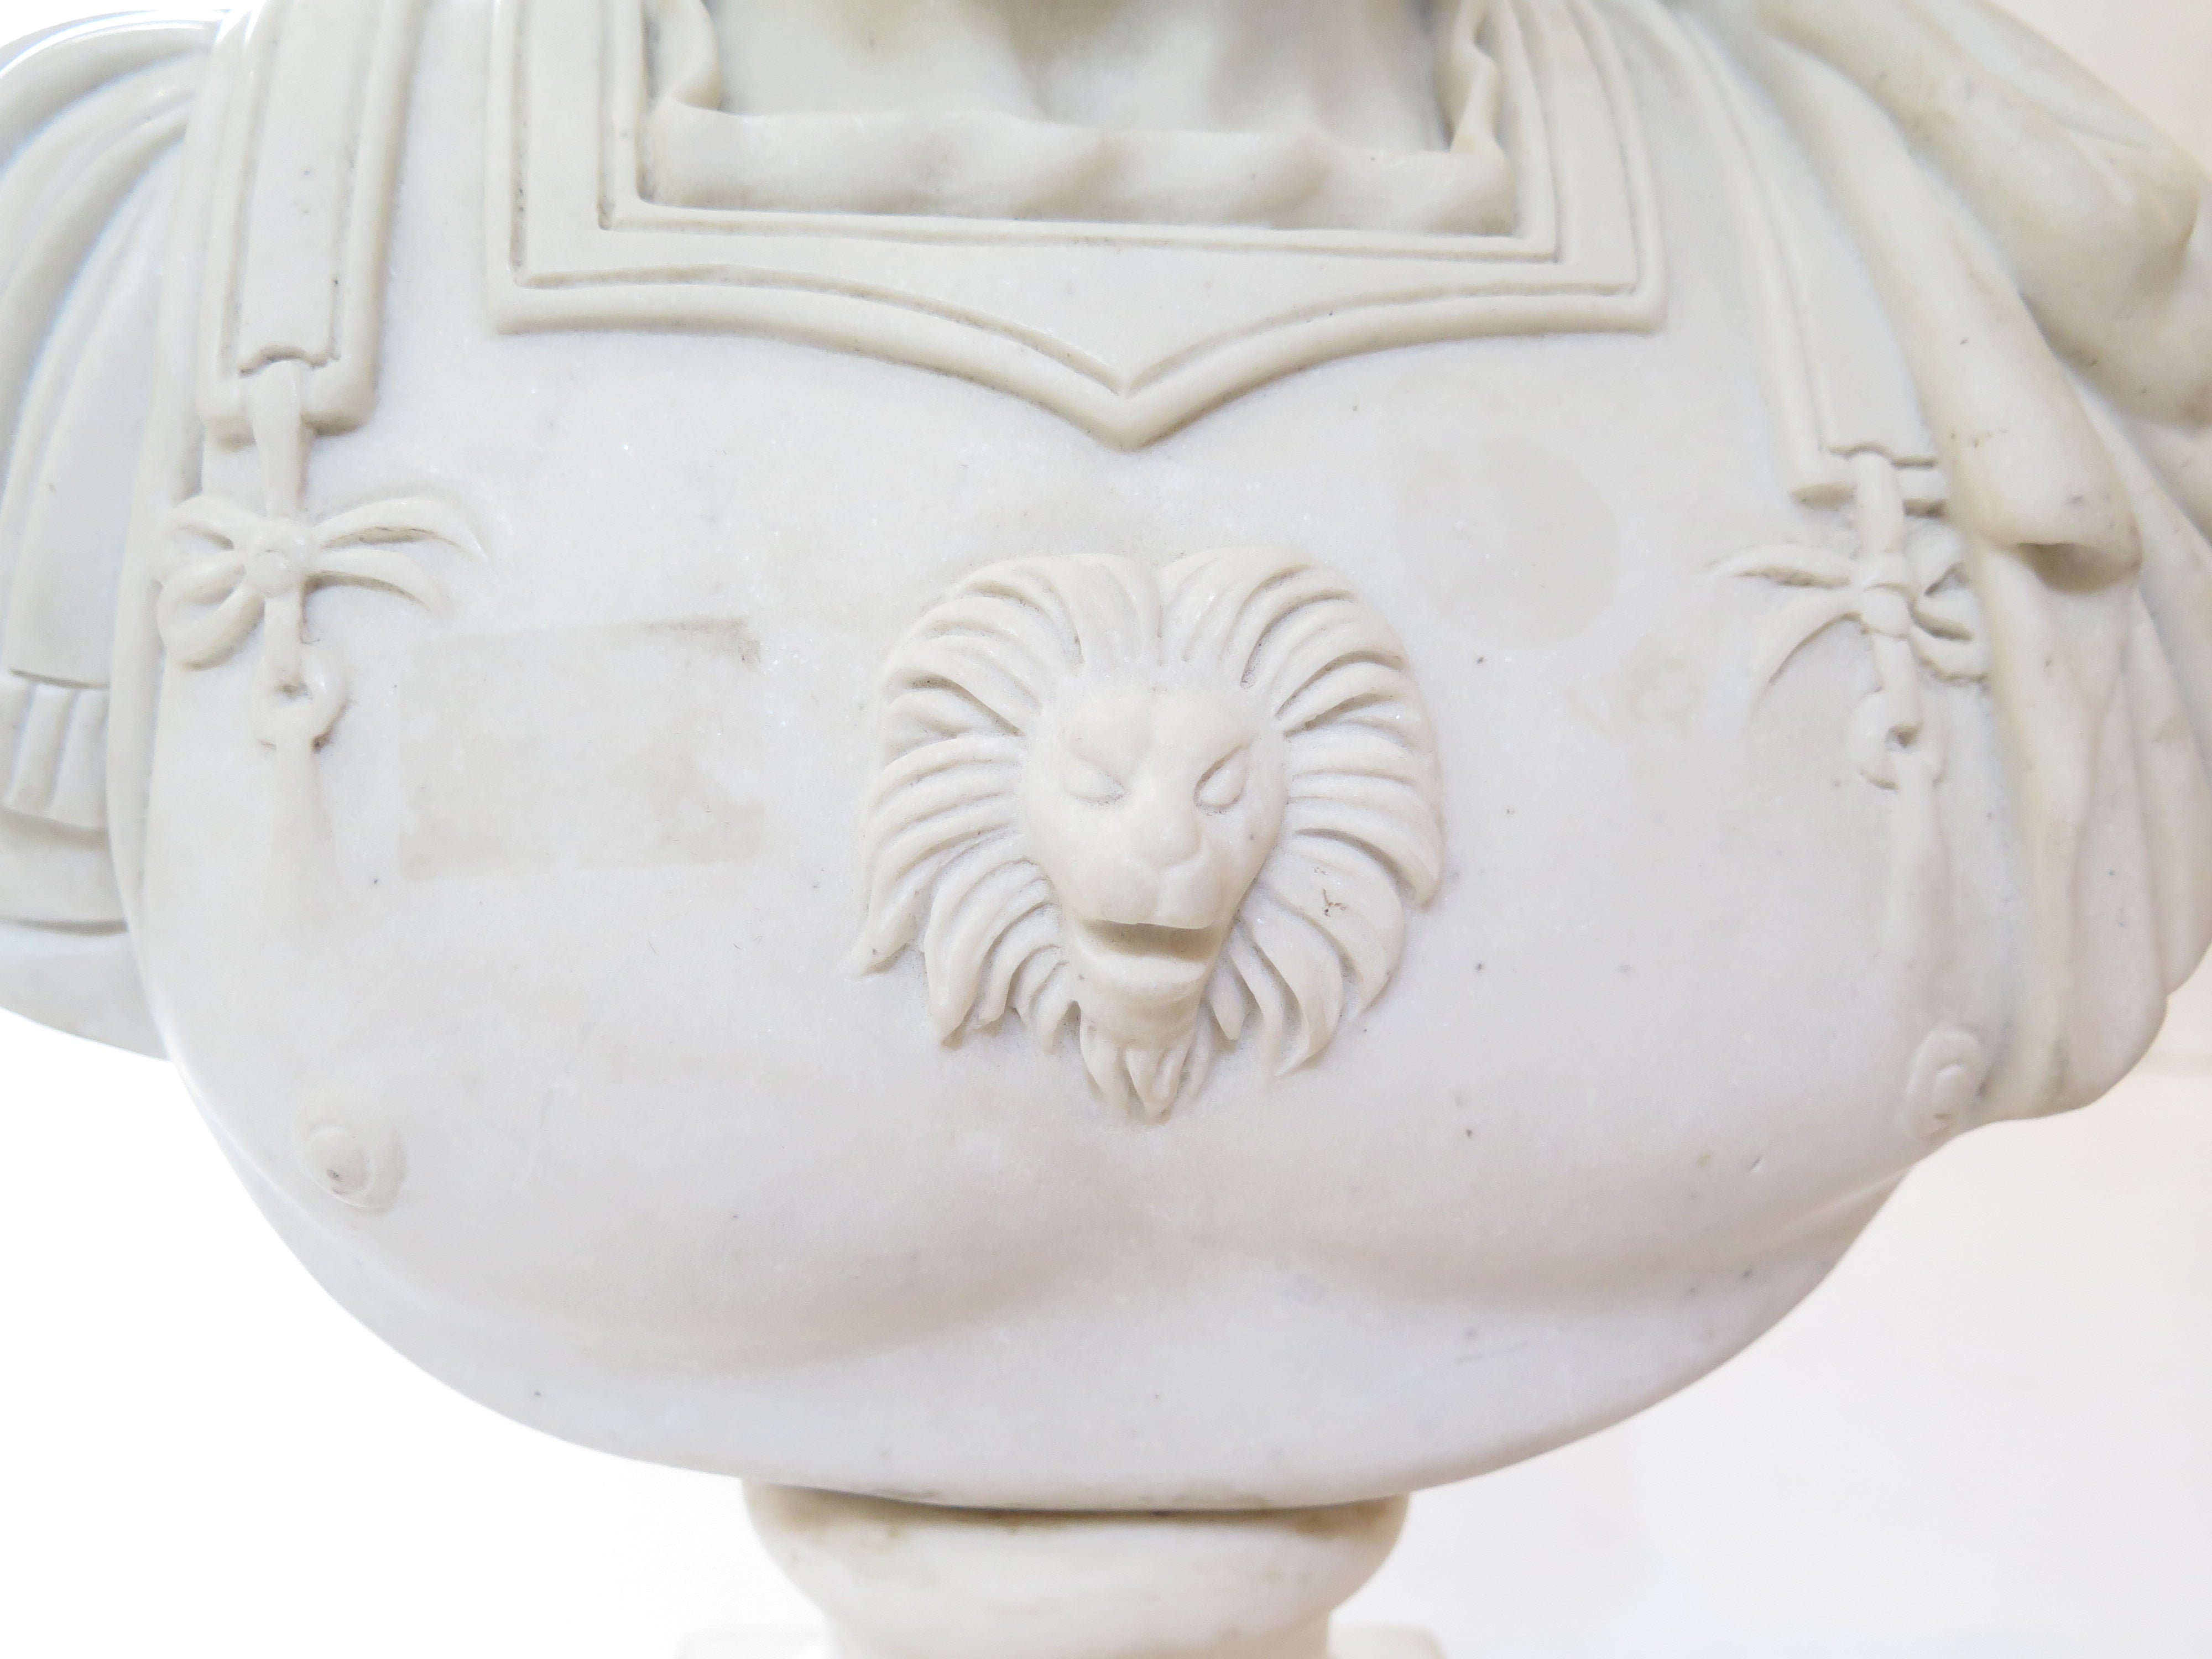 An Italian Carrara Marble Bust of a Roman Emperor  C. 1950, Italy